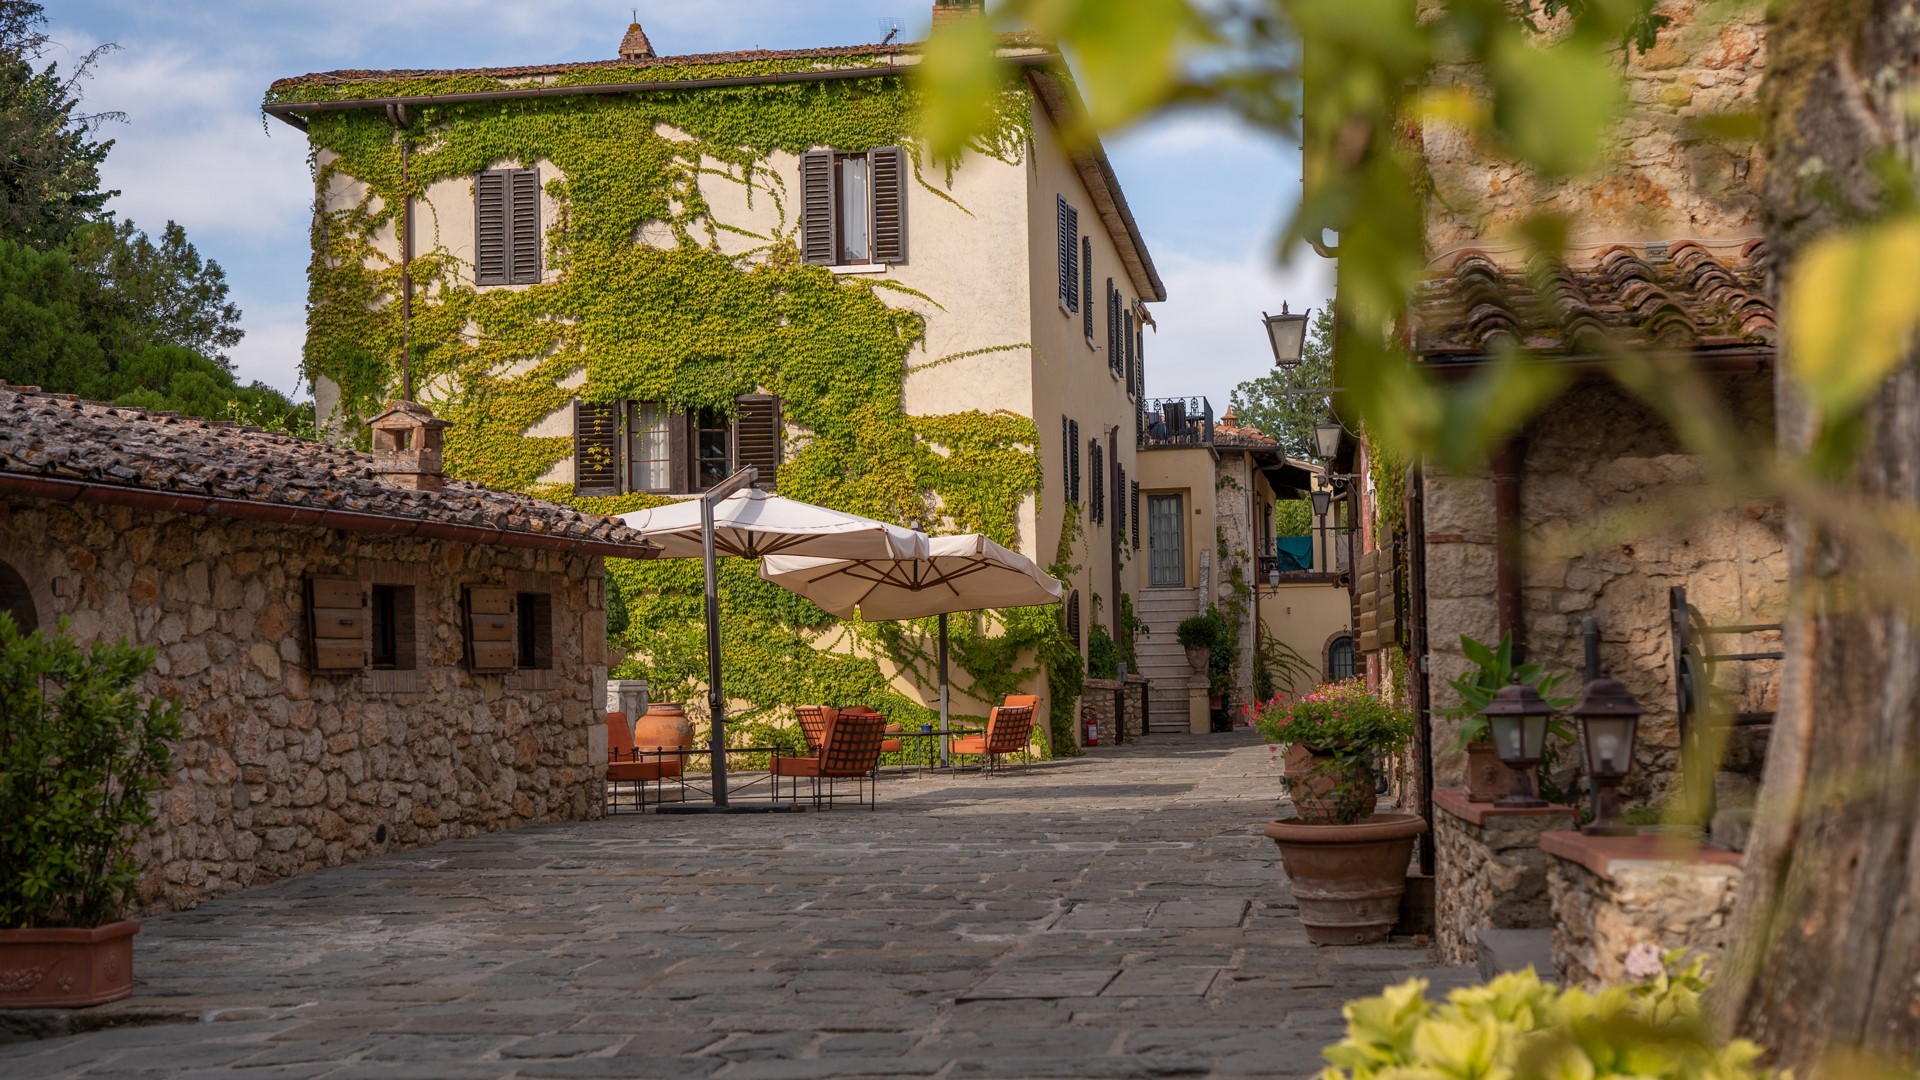 Borgo Stone buildings & walkway